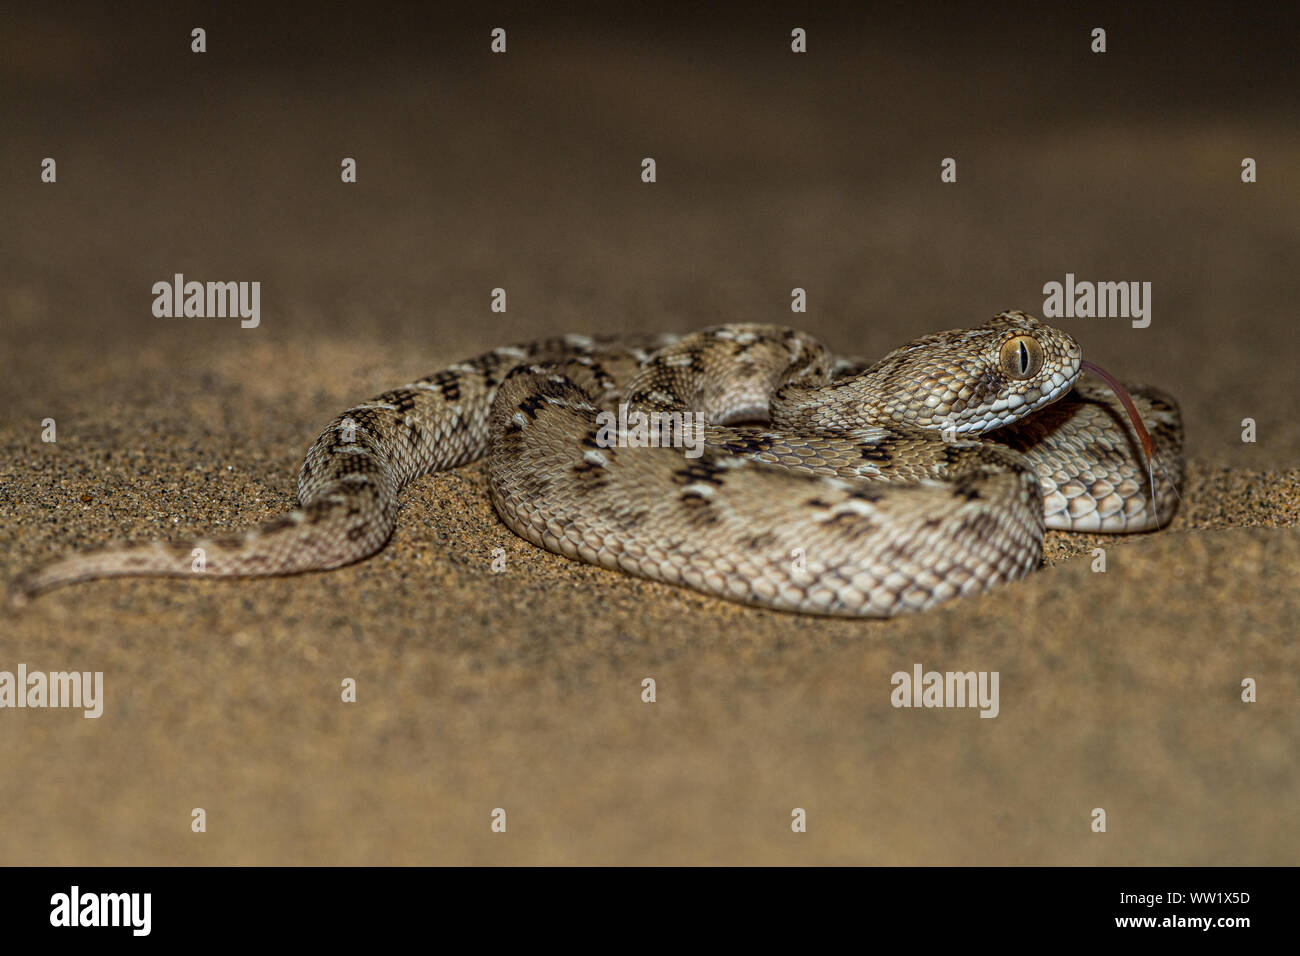 The Dangerous Venomous Snake of India. Stock Photo